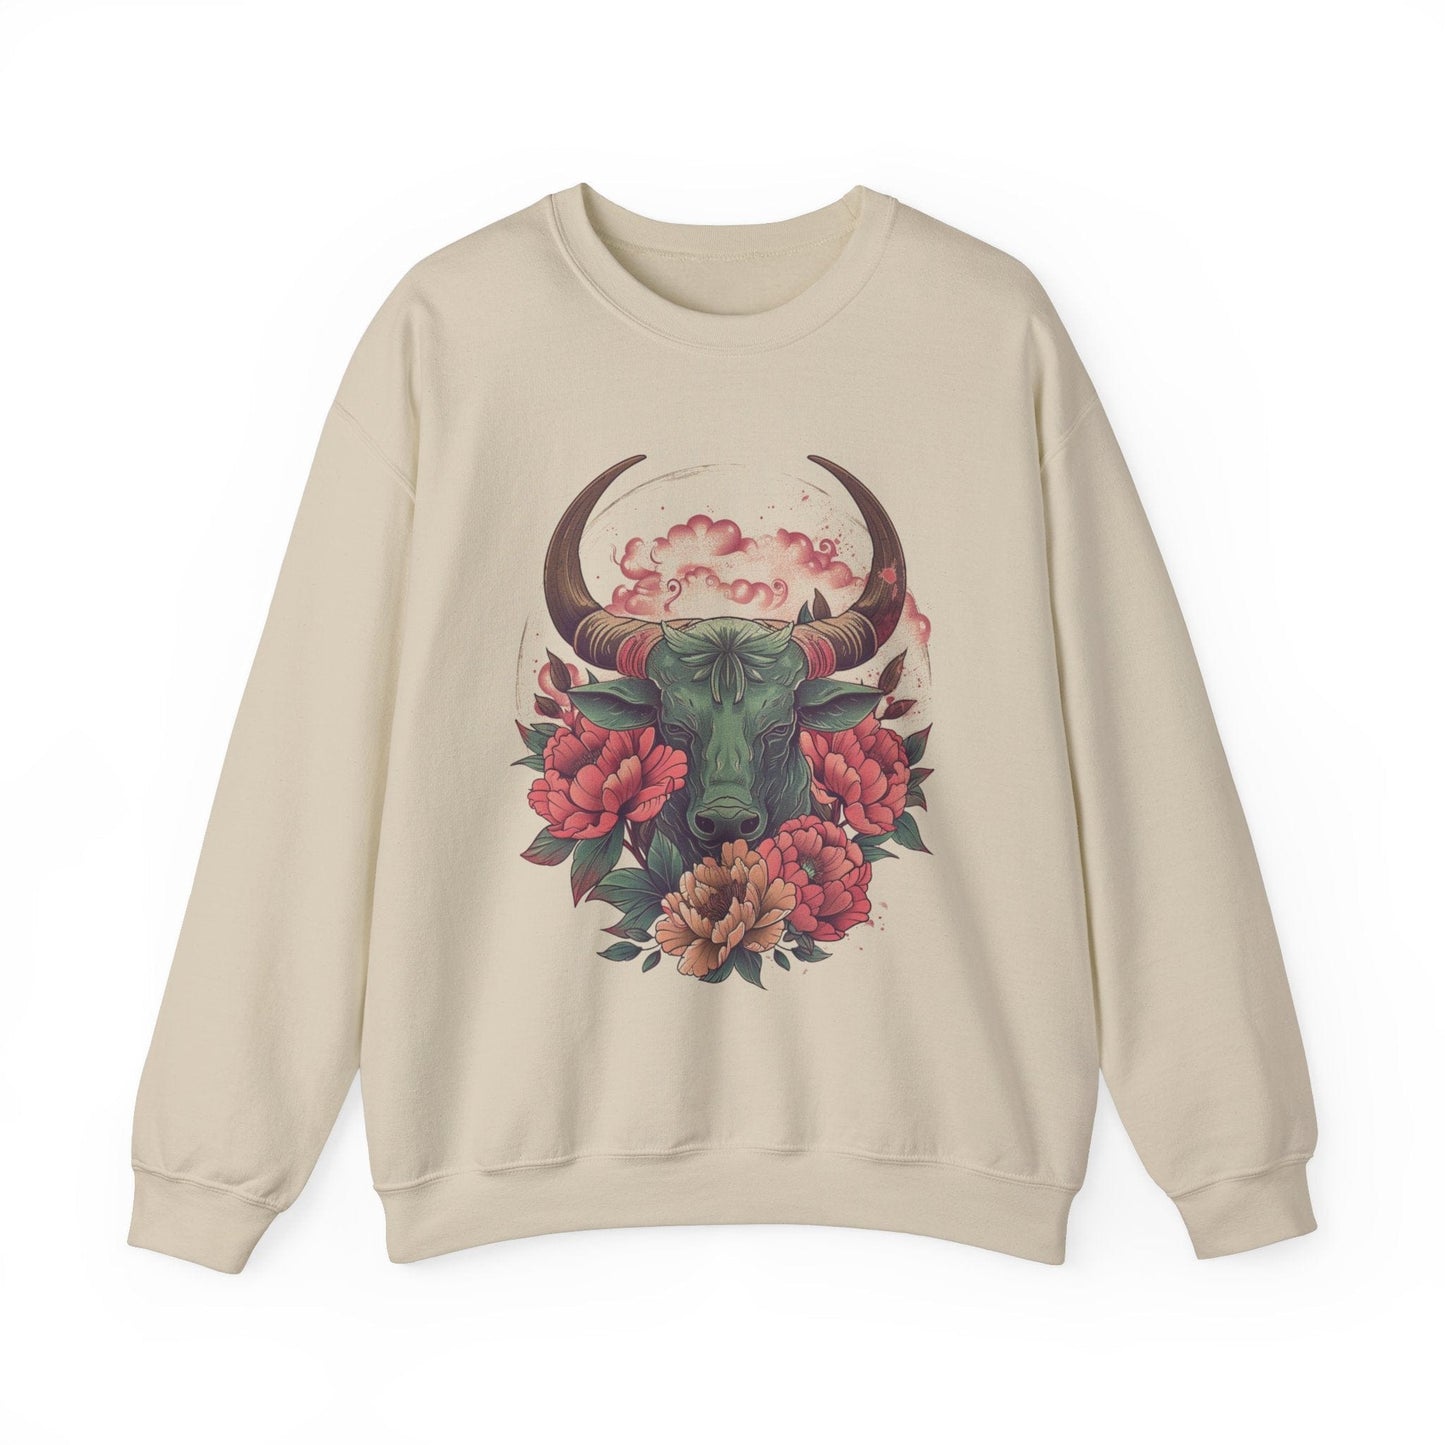 Sweatshirt S / Sand Taurus Floral Majesty Sweater